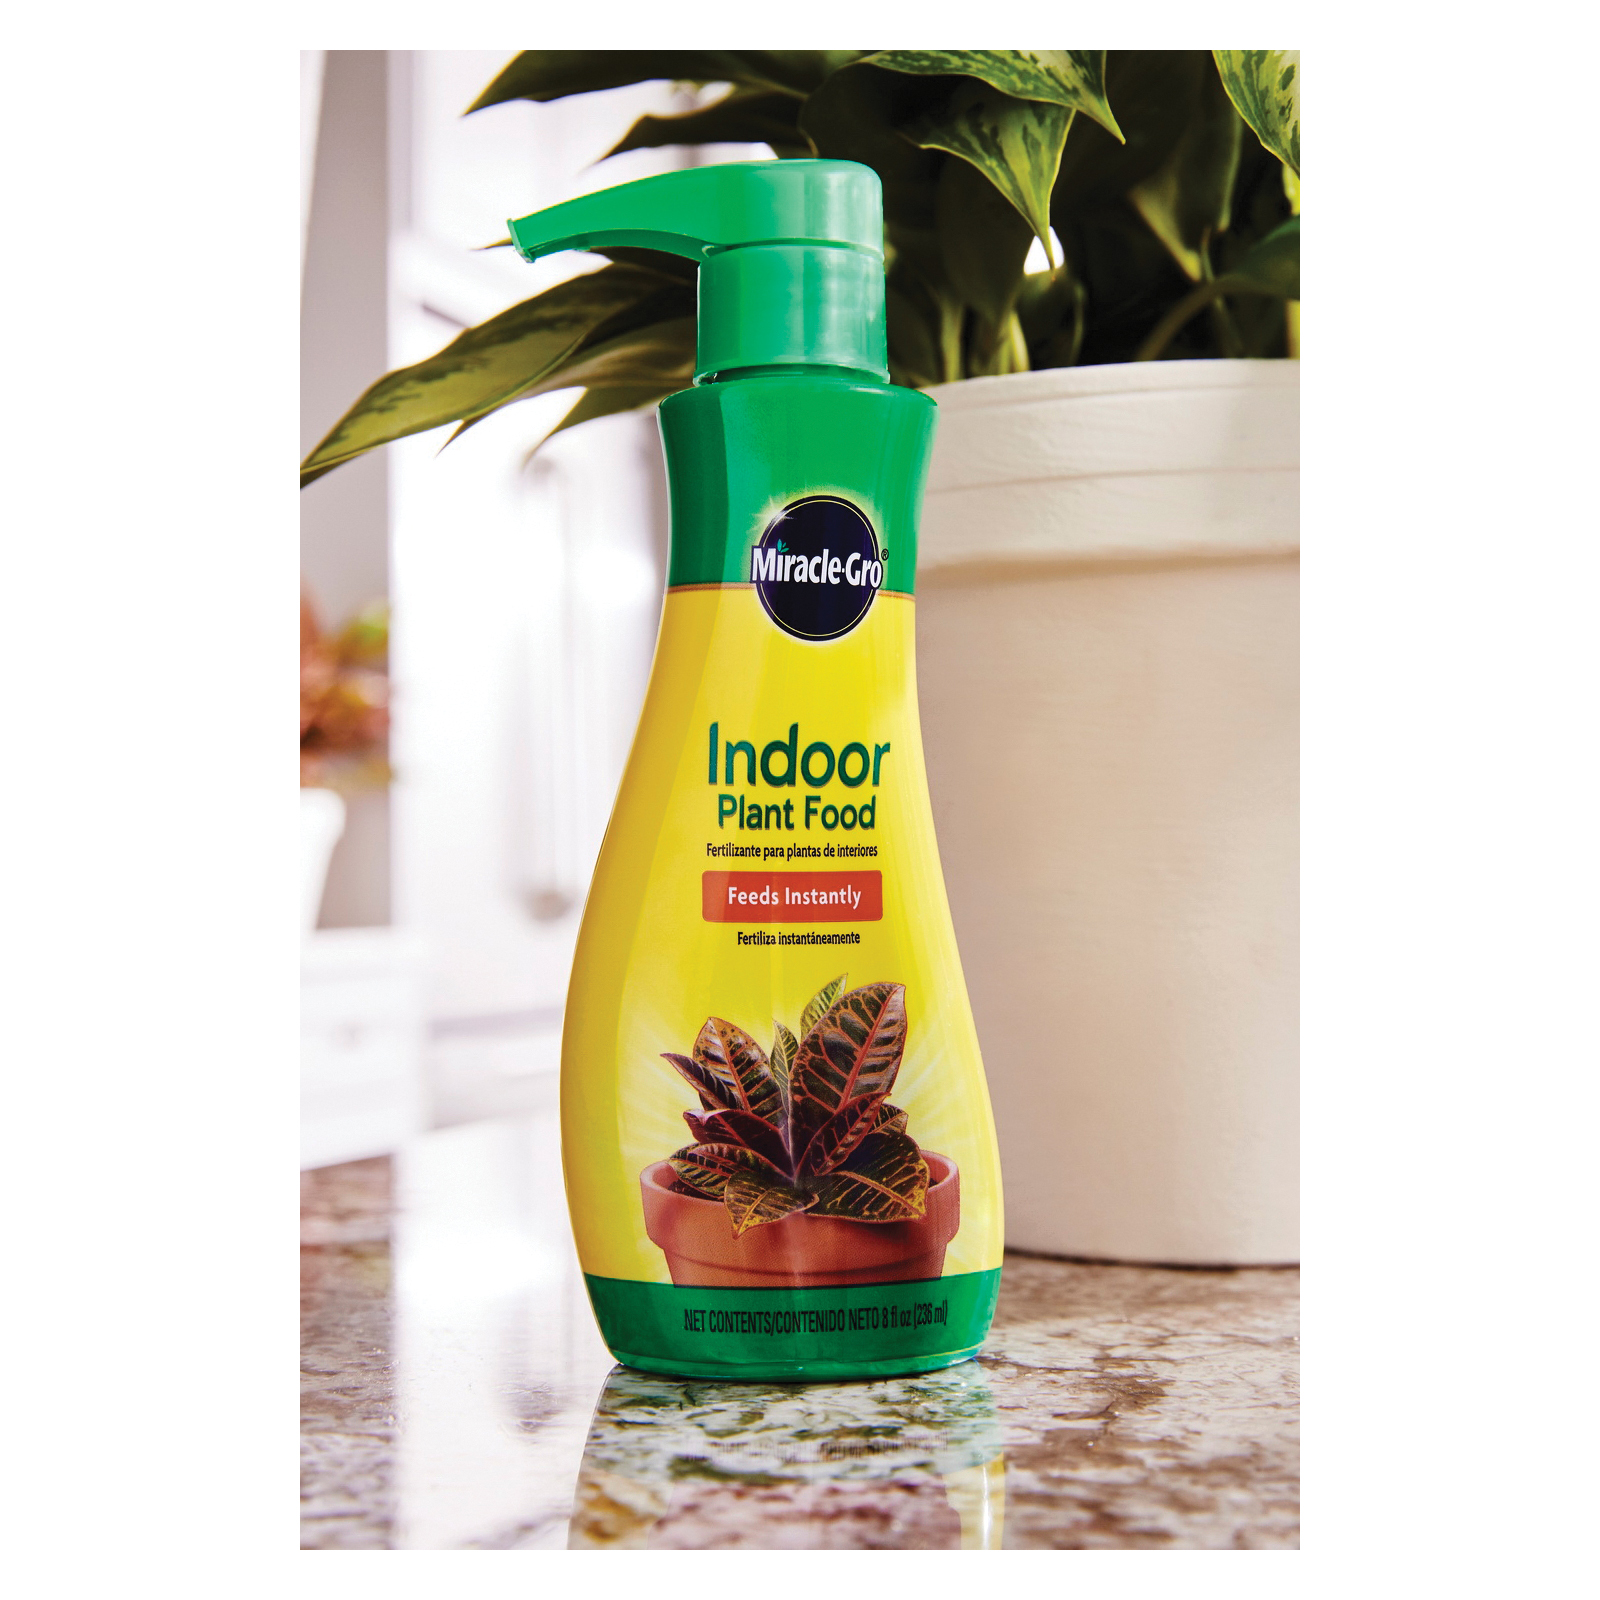 Miracle-Gro 1000551 Indoor Plant Food, 8 oz Bottle, Liquid, 1-1-1 N-P-K Ratio